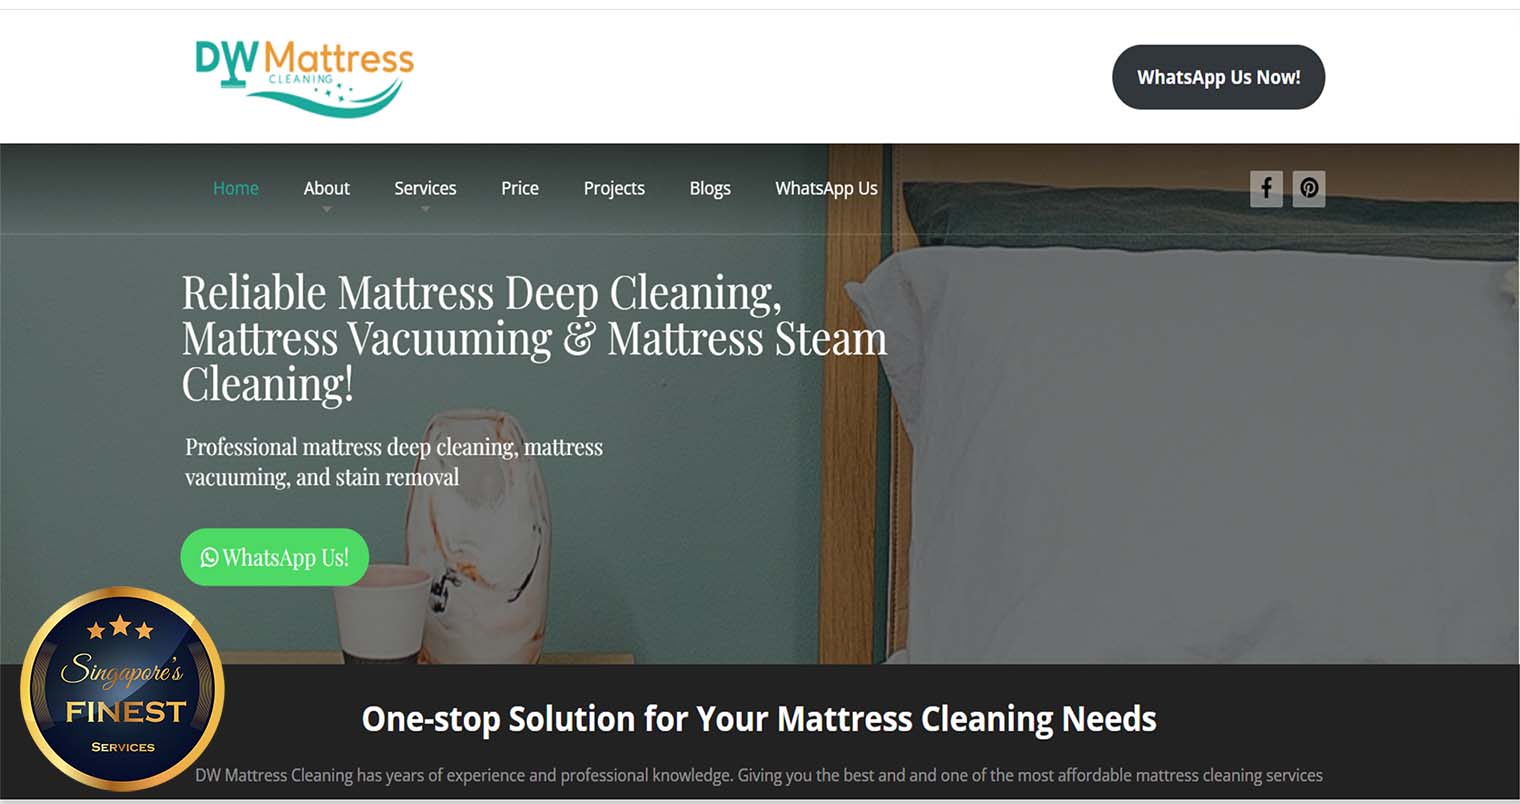 DW Mattress Cleaning - Mattress Cleaning Singapore